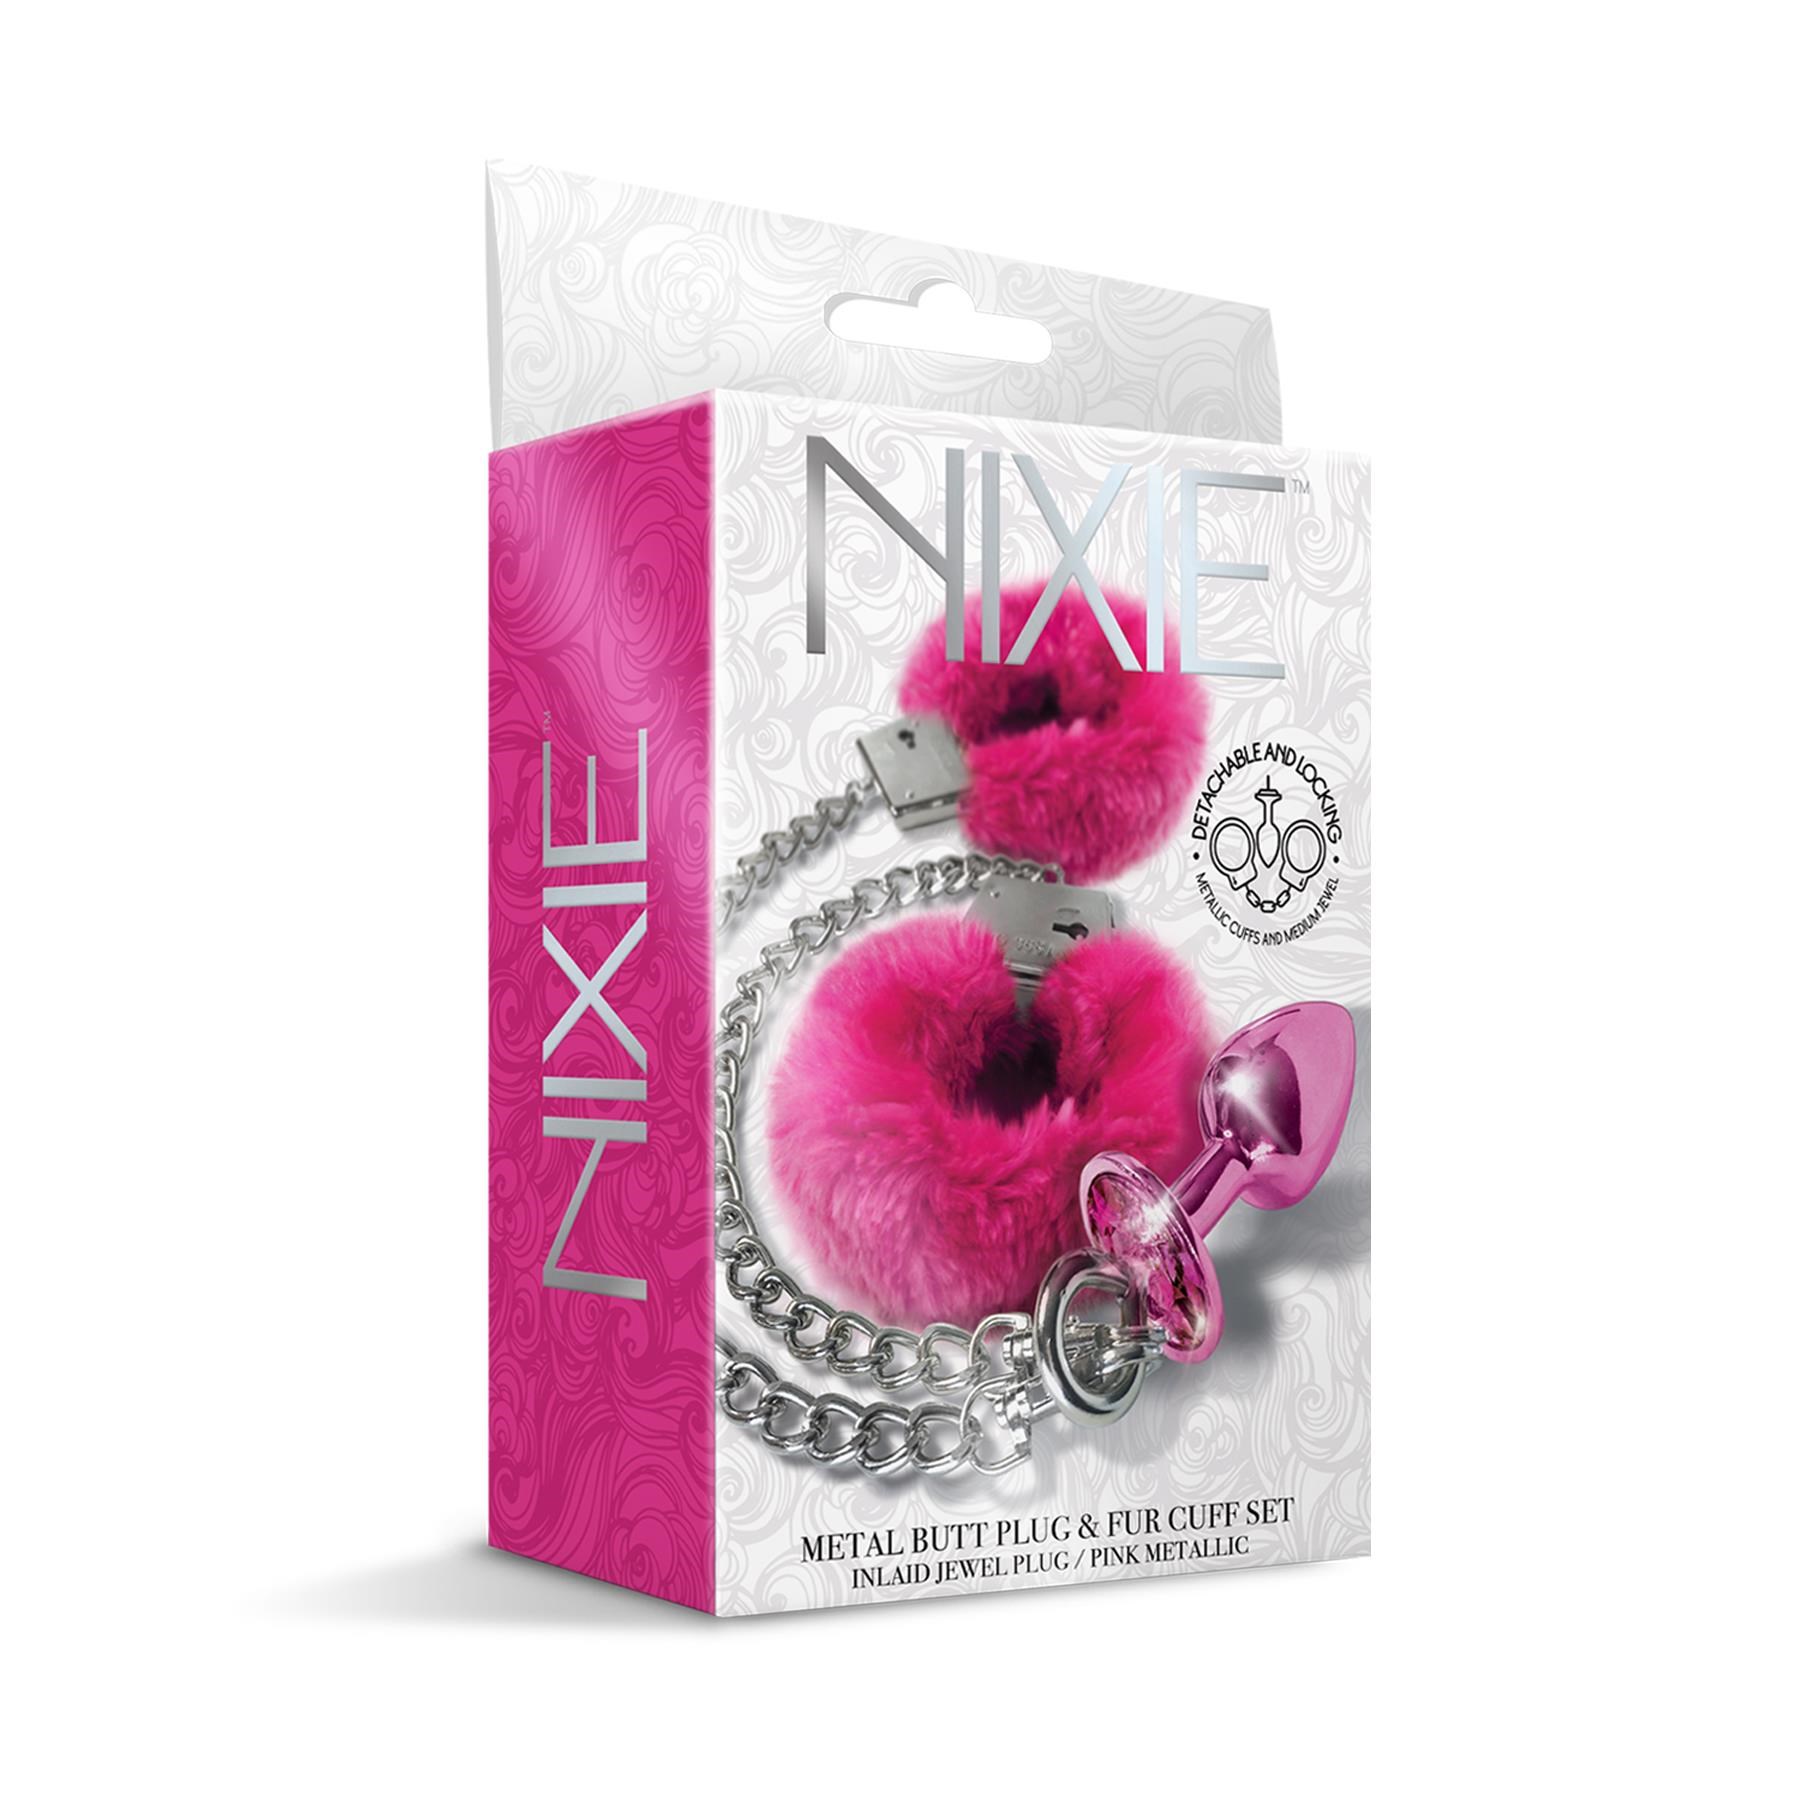 Nixie Metal Butt Plug and Fur Cuff Set - Packaging Shot - Pink